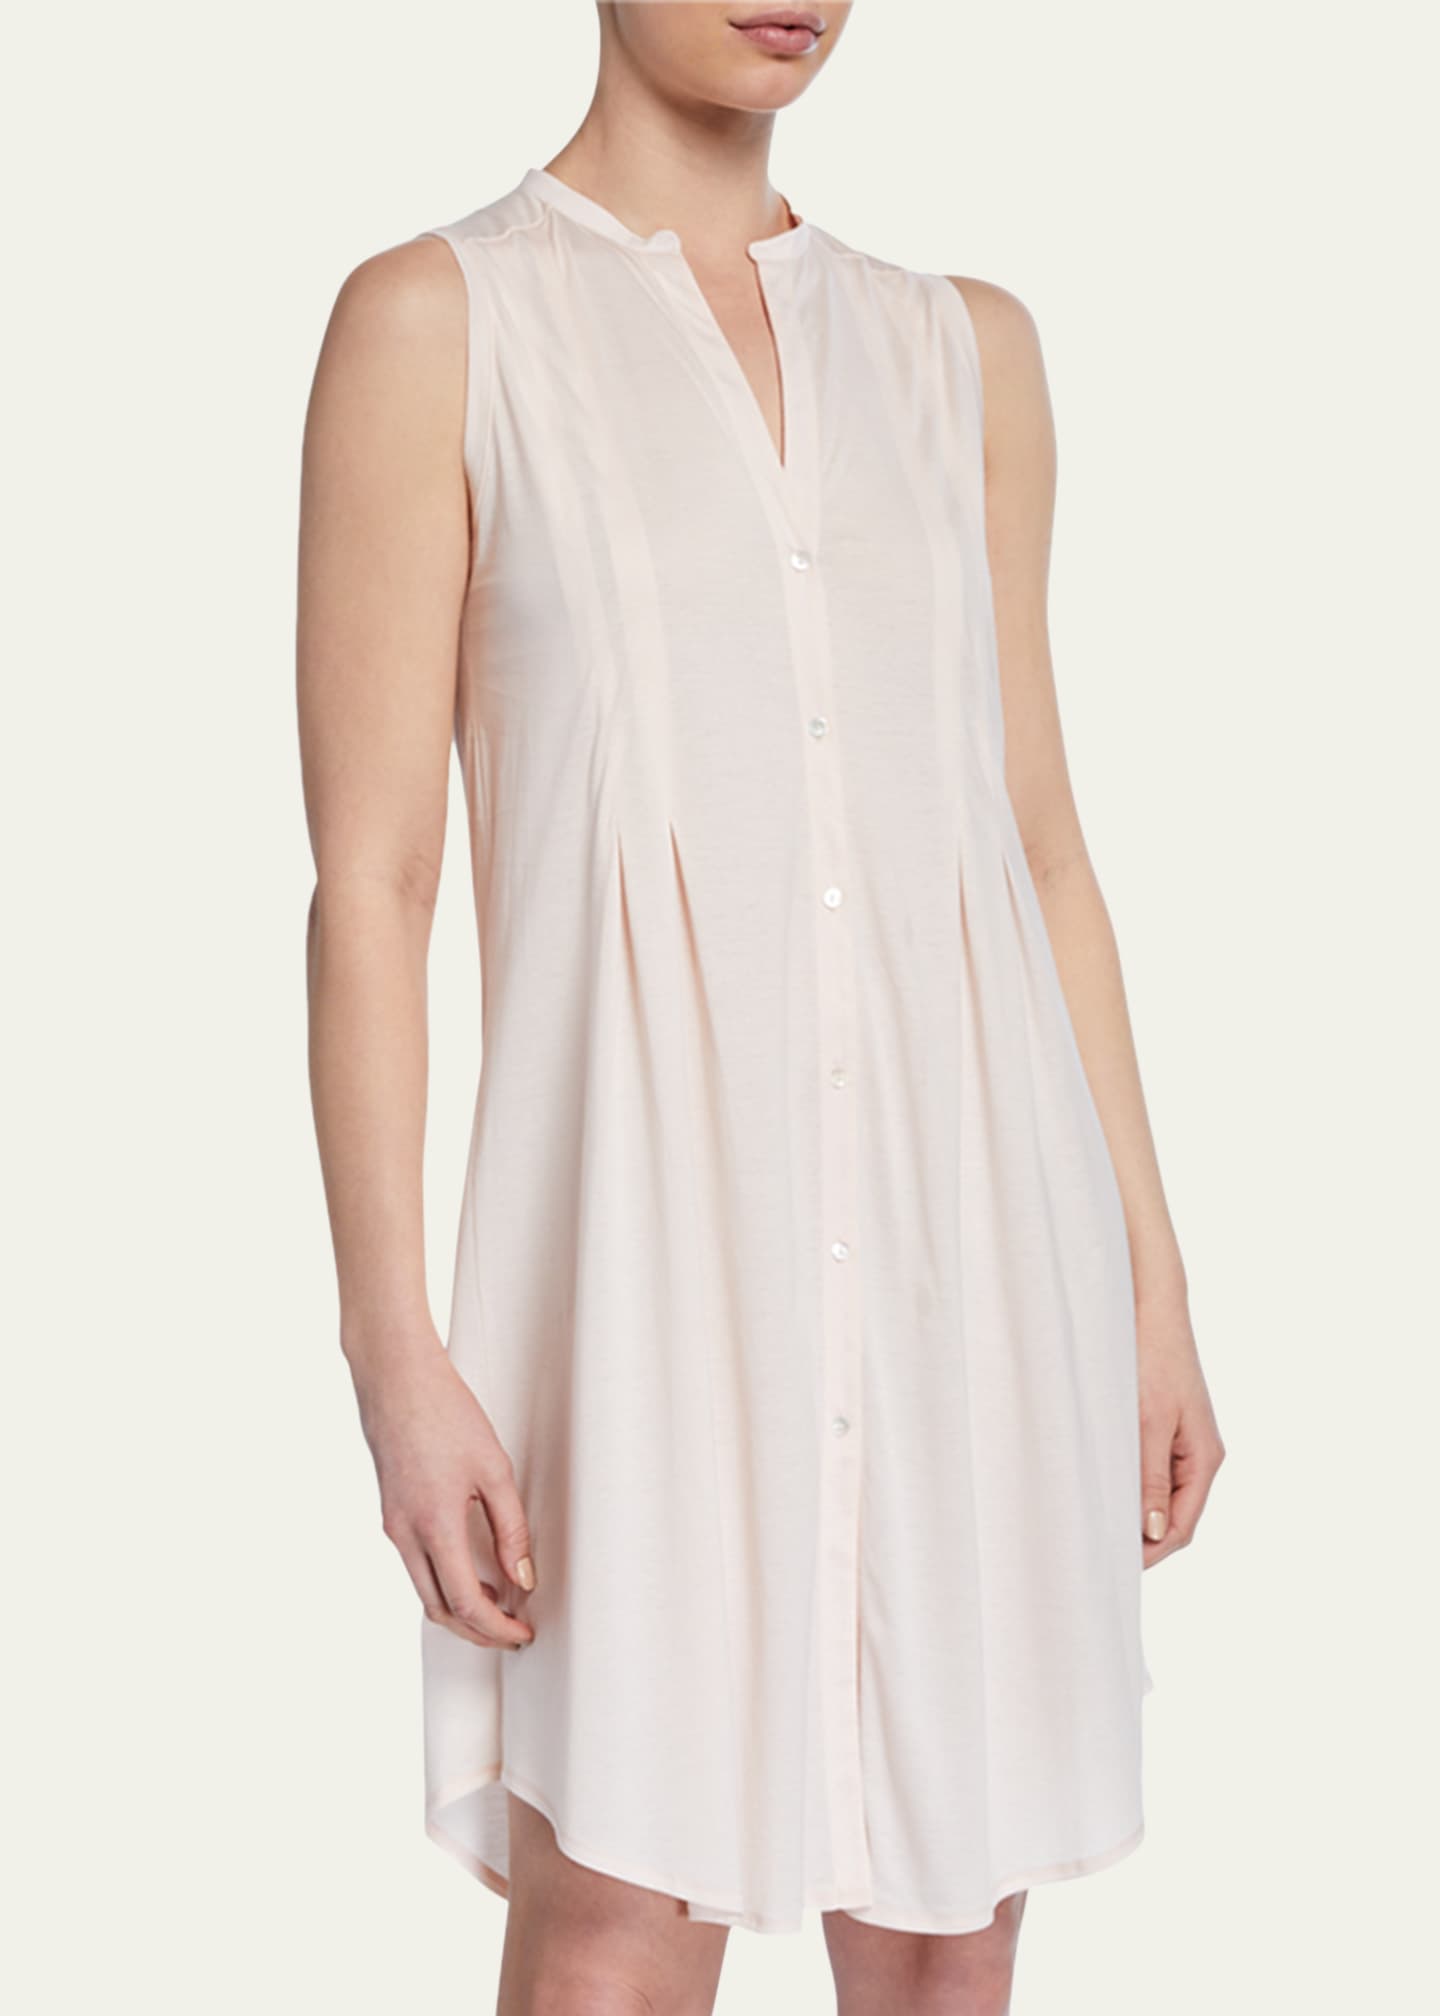 Hanro Cotton Deluxe Sleeveless Shirtwaist Nightgown Image 2 of 3